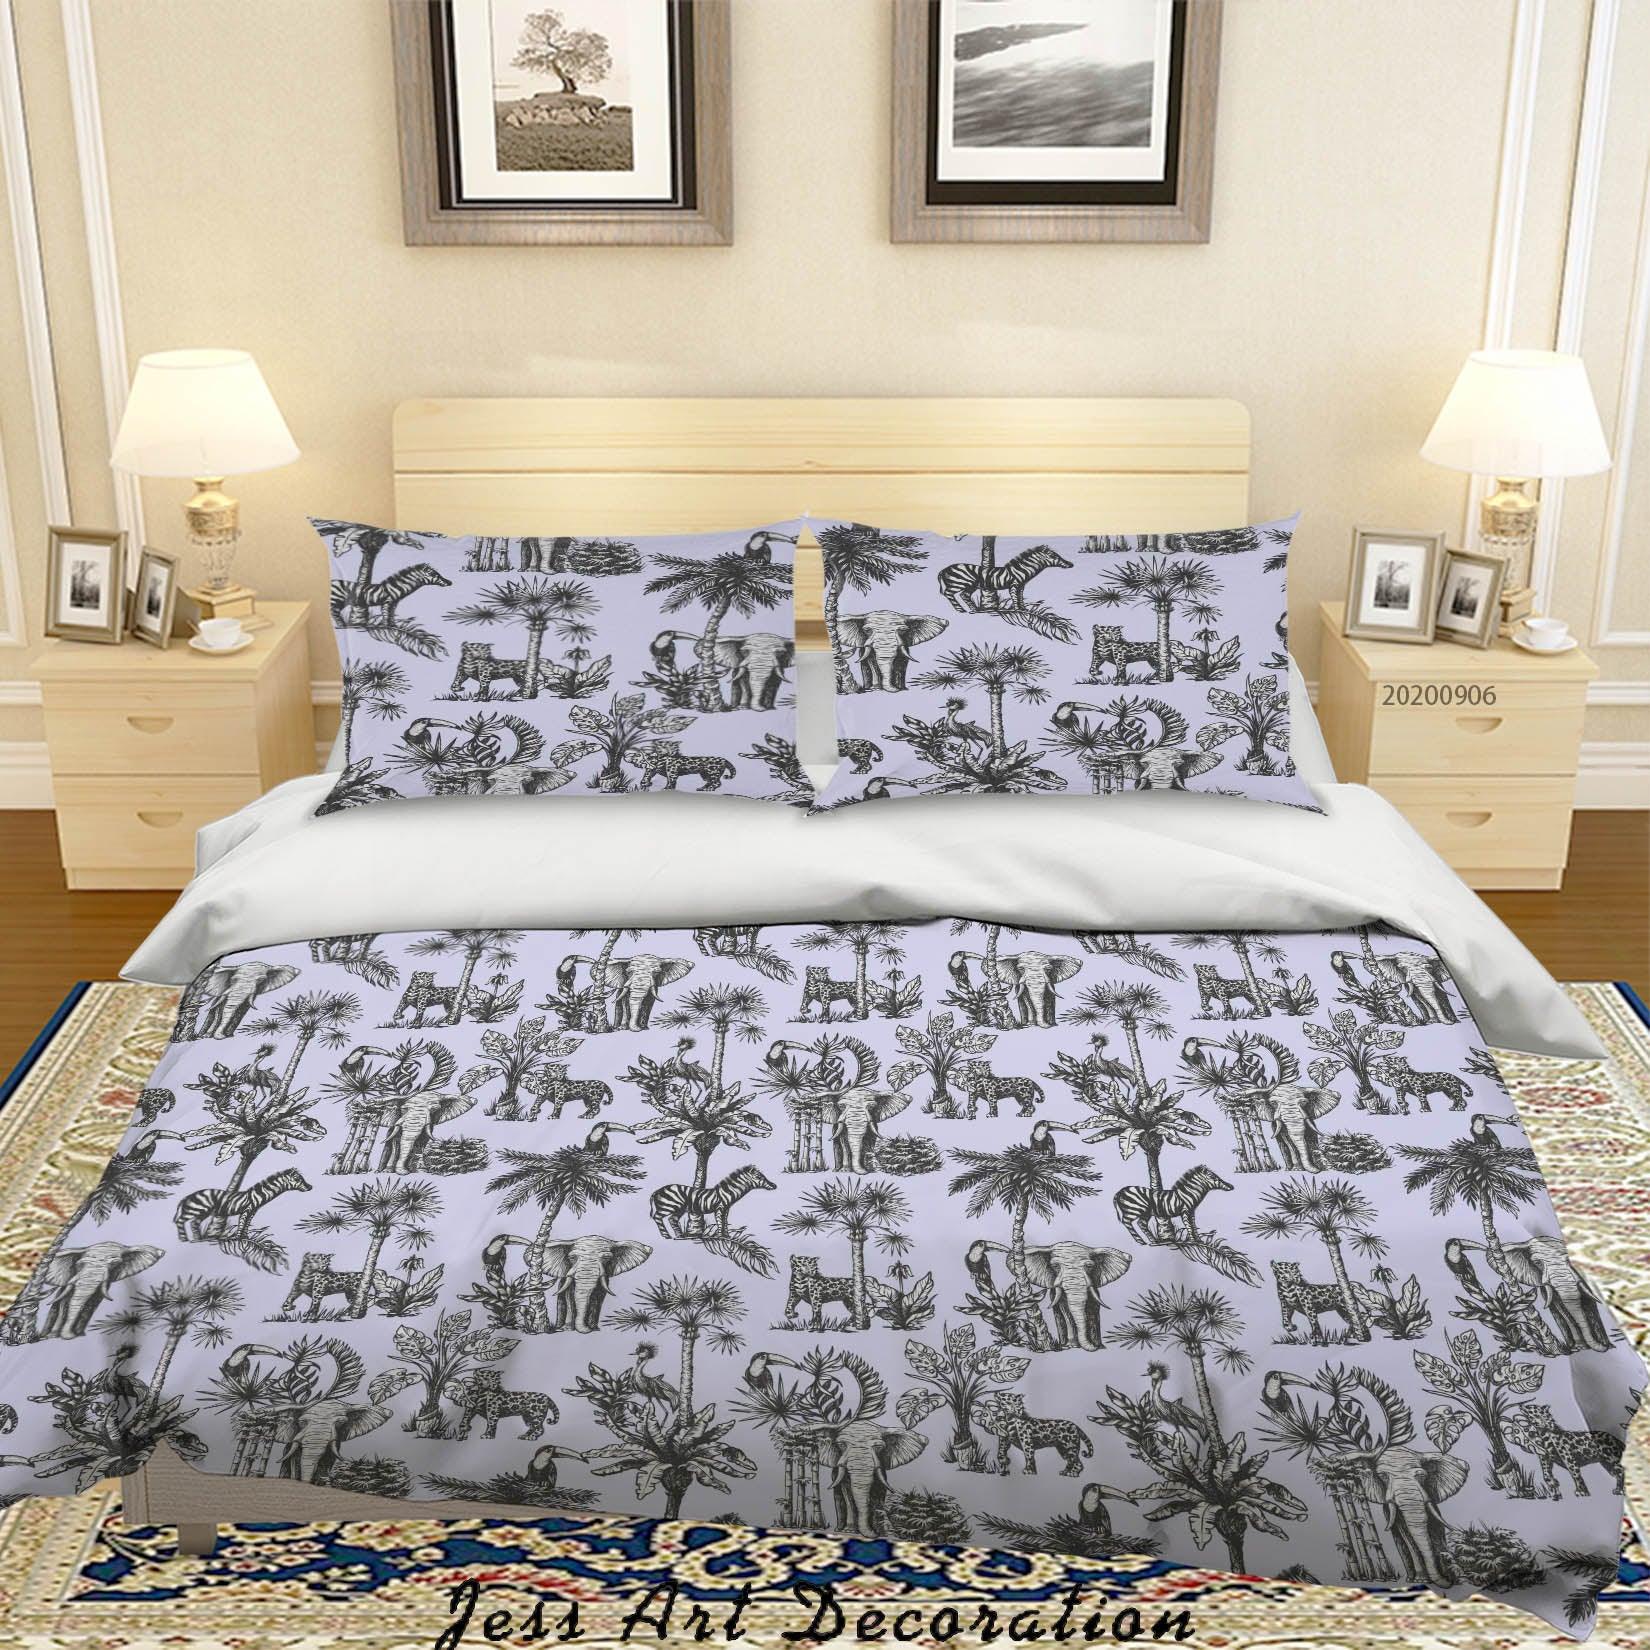 3D Vintage Tropical Leaves Zebra Elephant Pattern Quilt Cover Set Bedding Set Duvet Cover Pillowcases WJ 3661- Jess Art Decoration